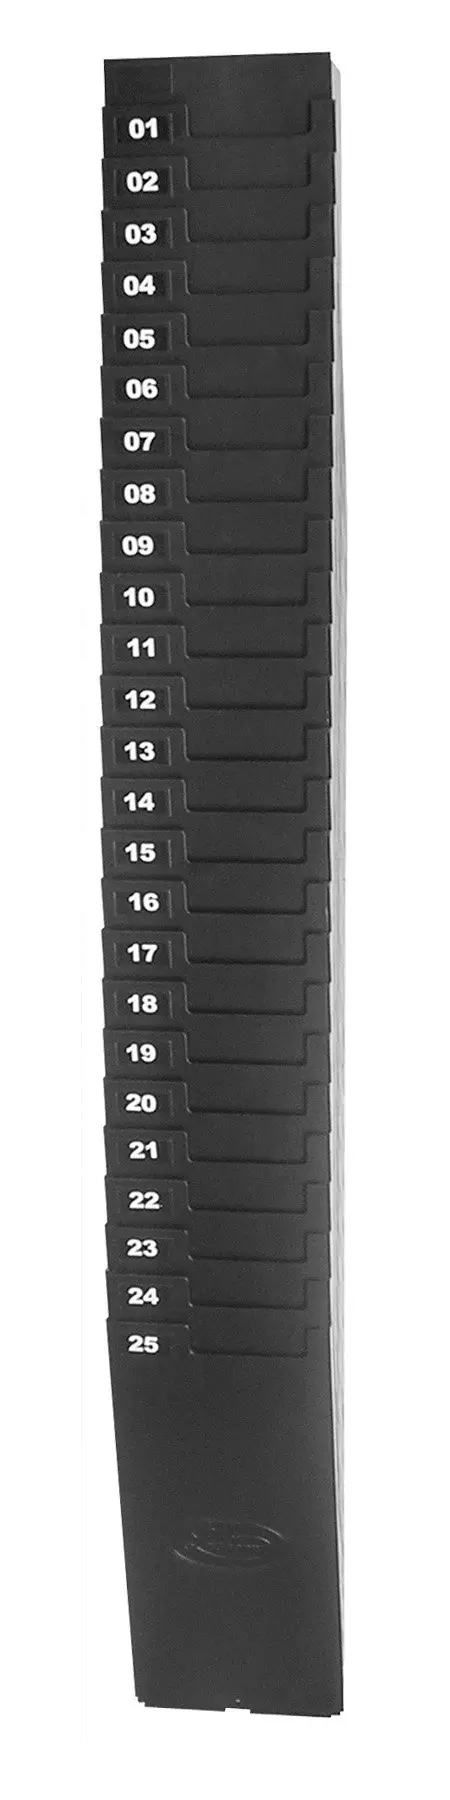 Lathem Time 25-7EX Expandable Time Card Rack 25-Pocket Holds 7 High Cards Black Plastic